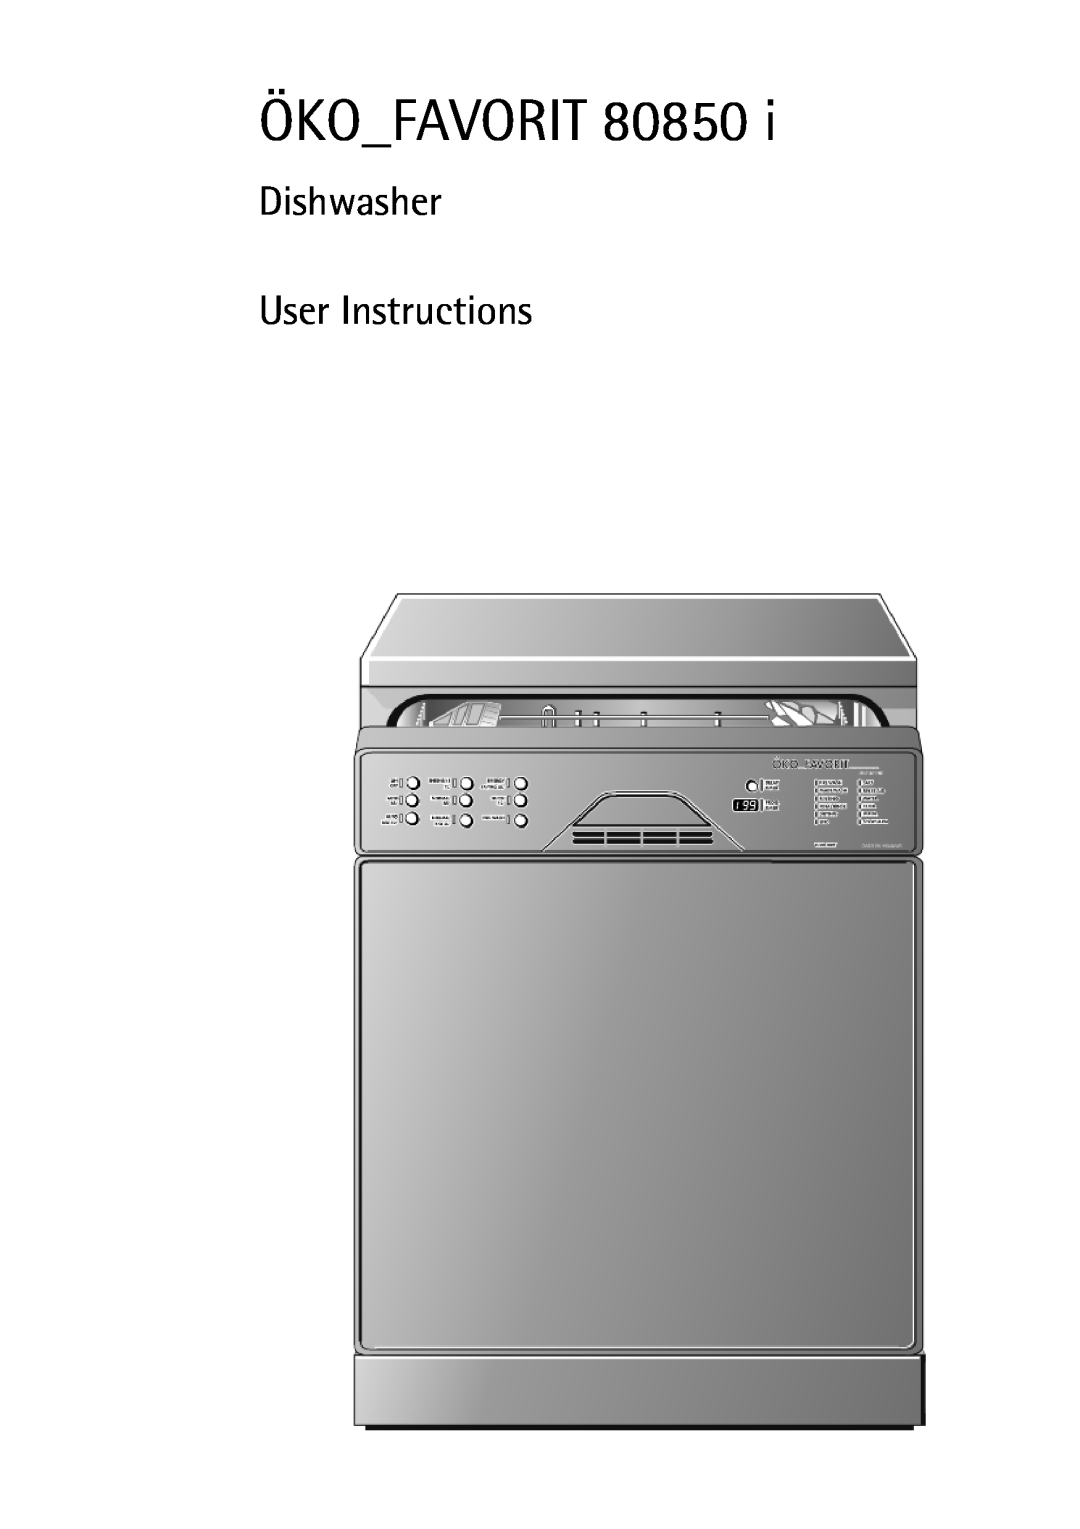 AEG 80850 I manual ÖKO_FAVORIT 80850, Dishwasher User Instructions 